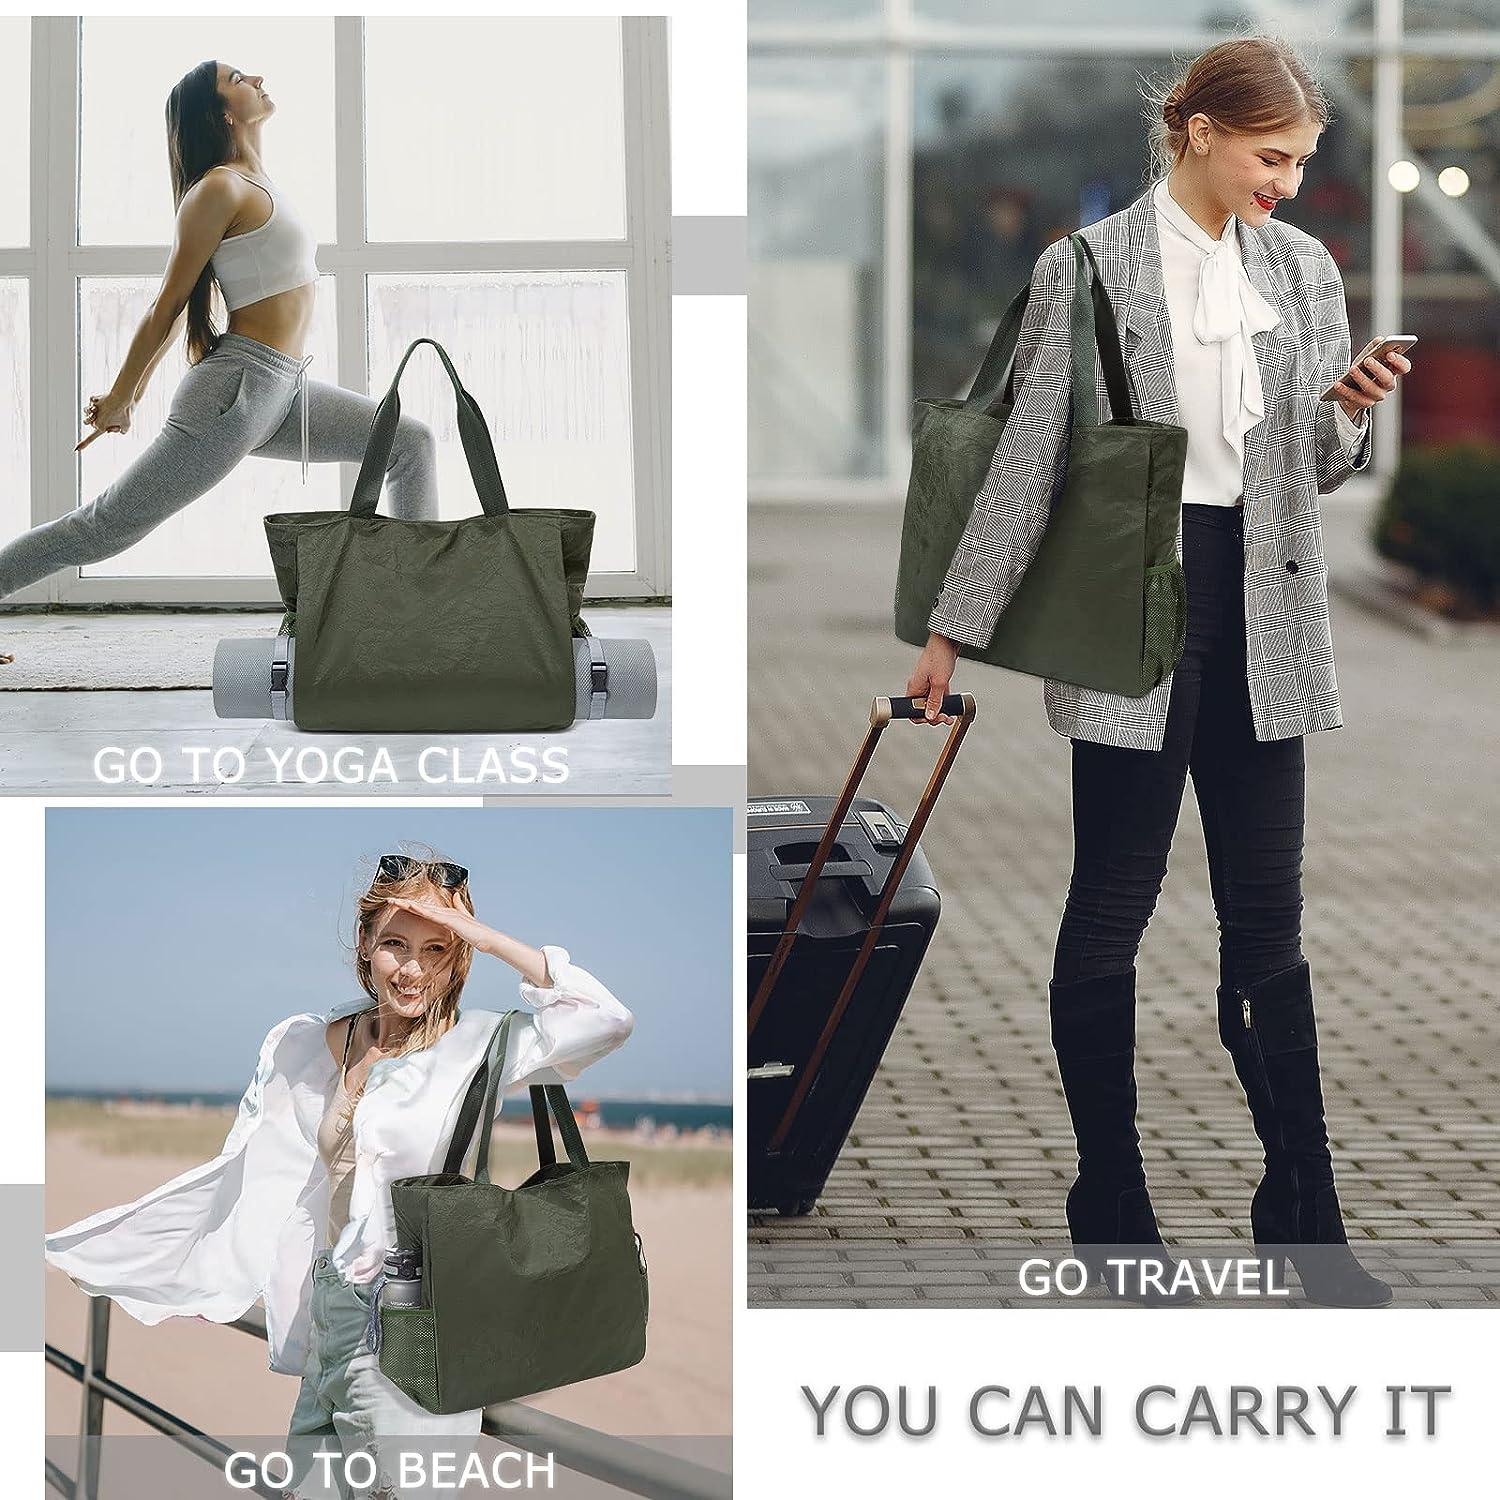 Sports Gym Bags Men Women Training Fitness Travel Handbag Yoga Mat Sport Bag  with shoes Compartment,Black 